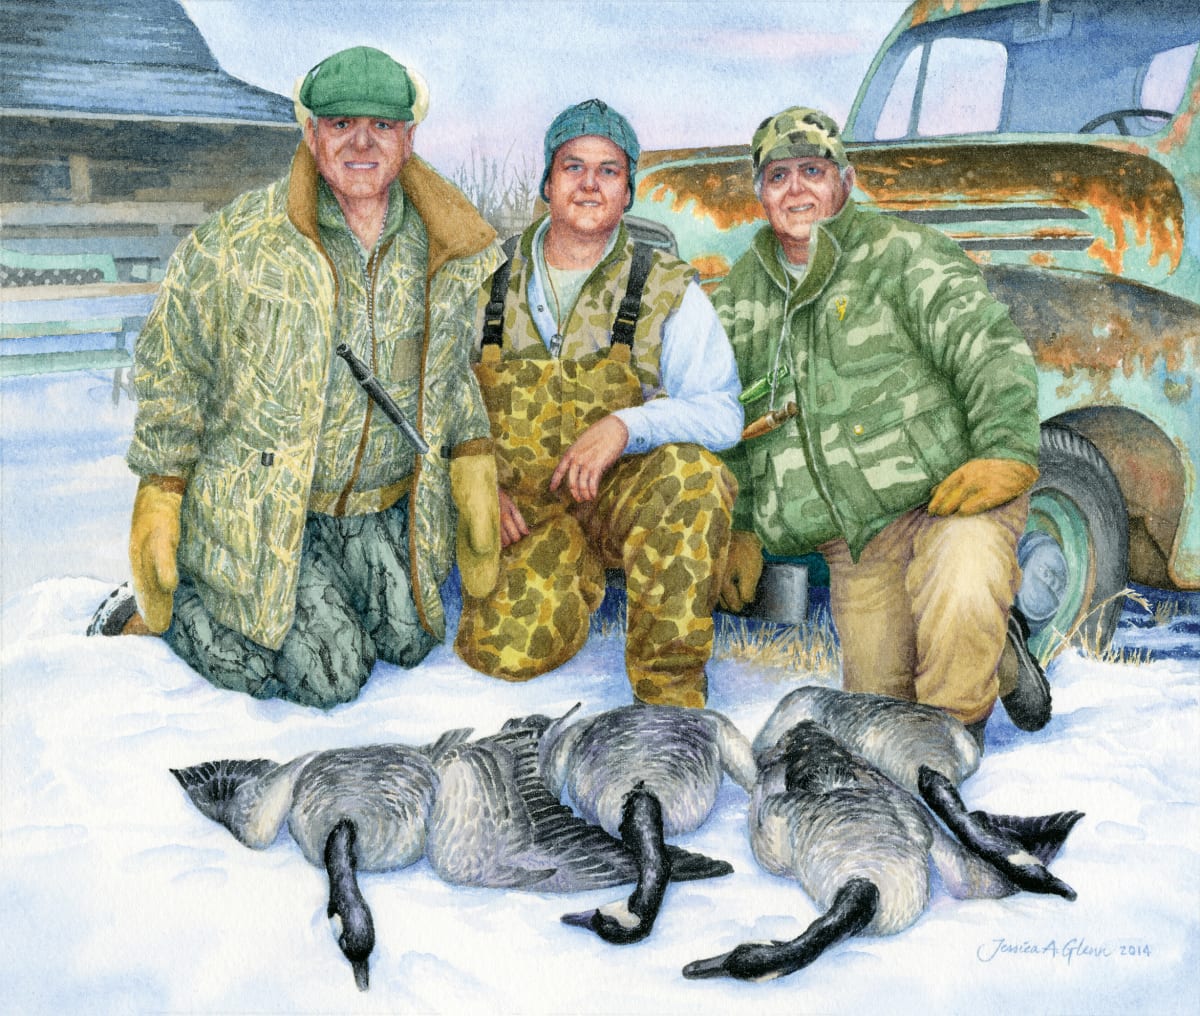 Goose Hunters by Jessica Glenn 